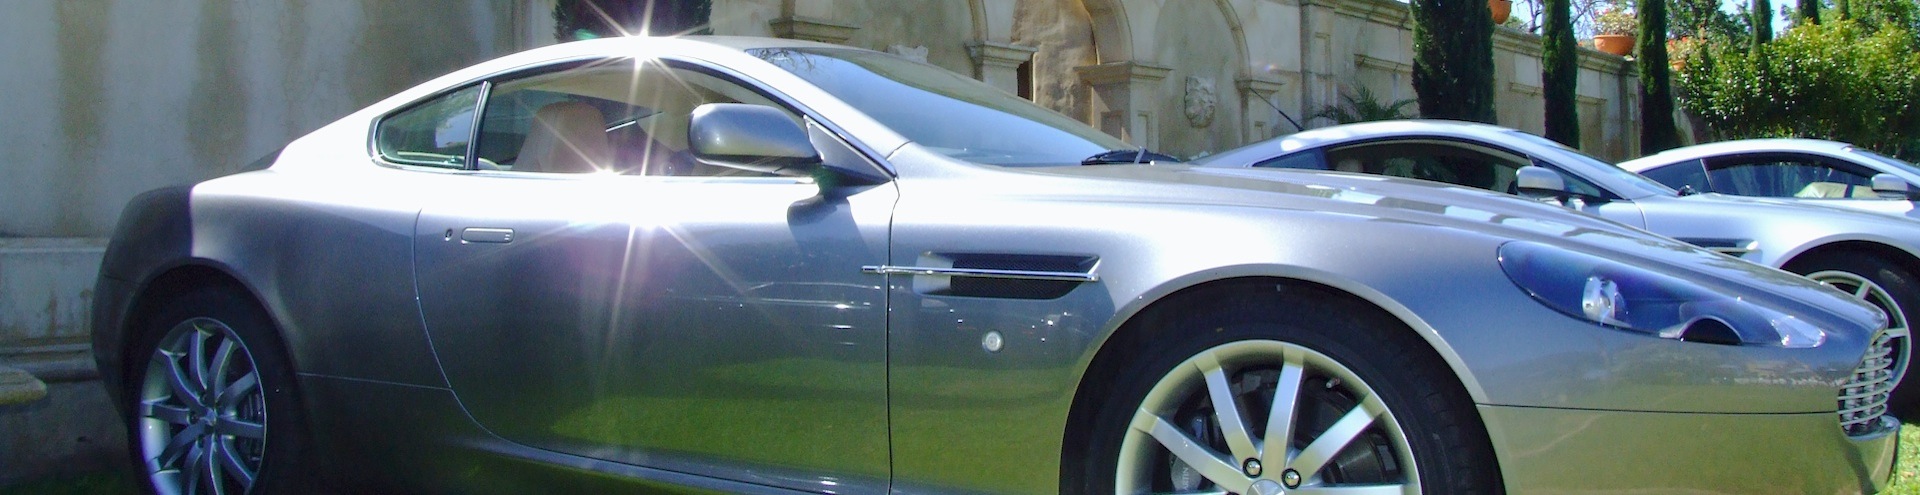 Aston Martin DBS. Copyright © Virtual Visions.